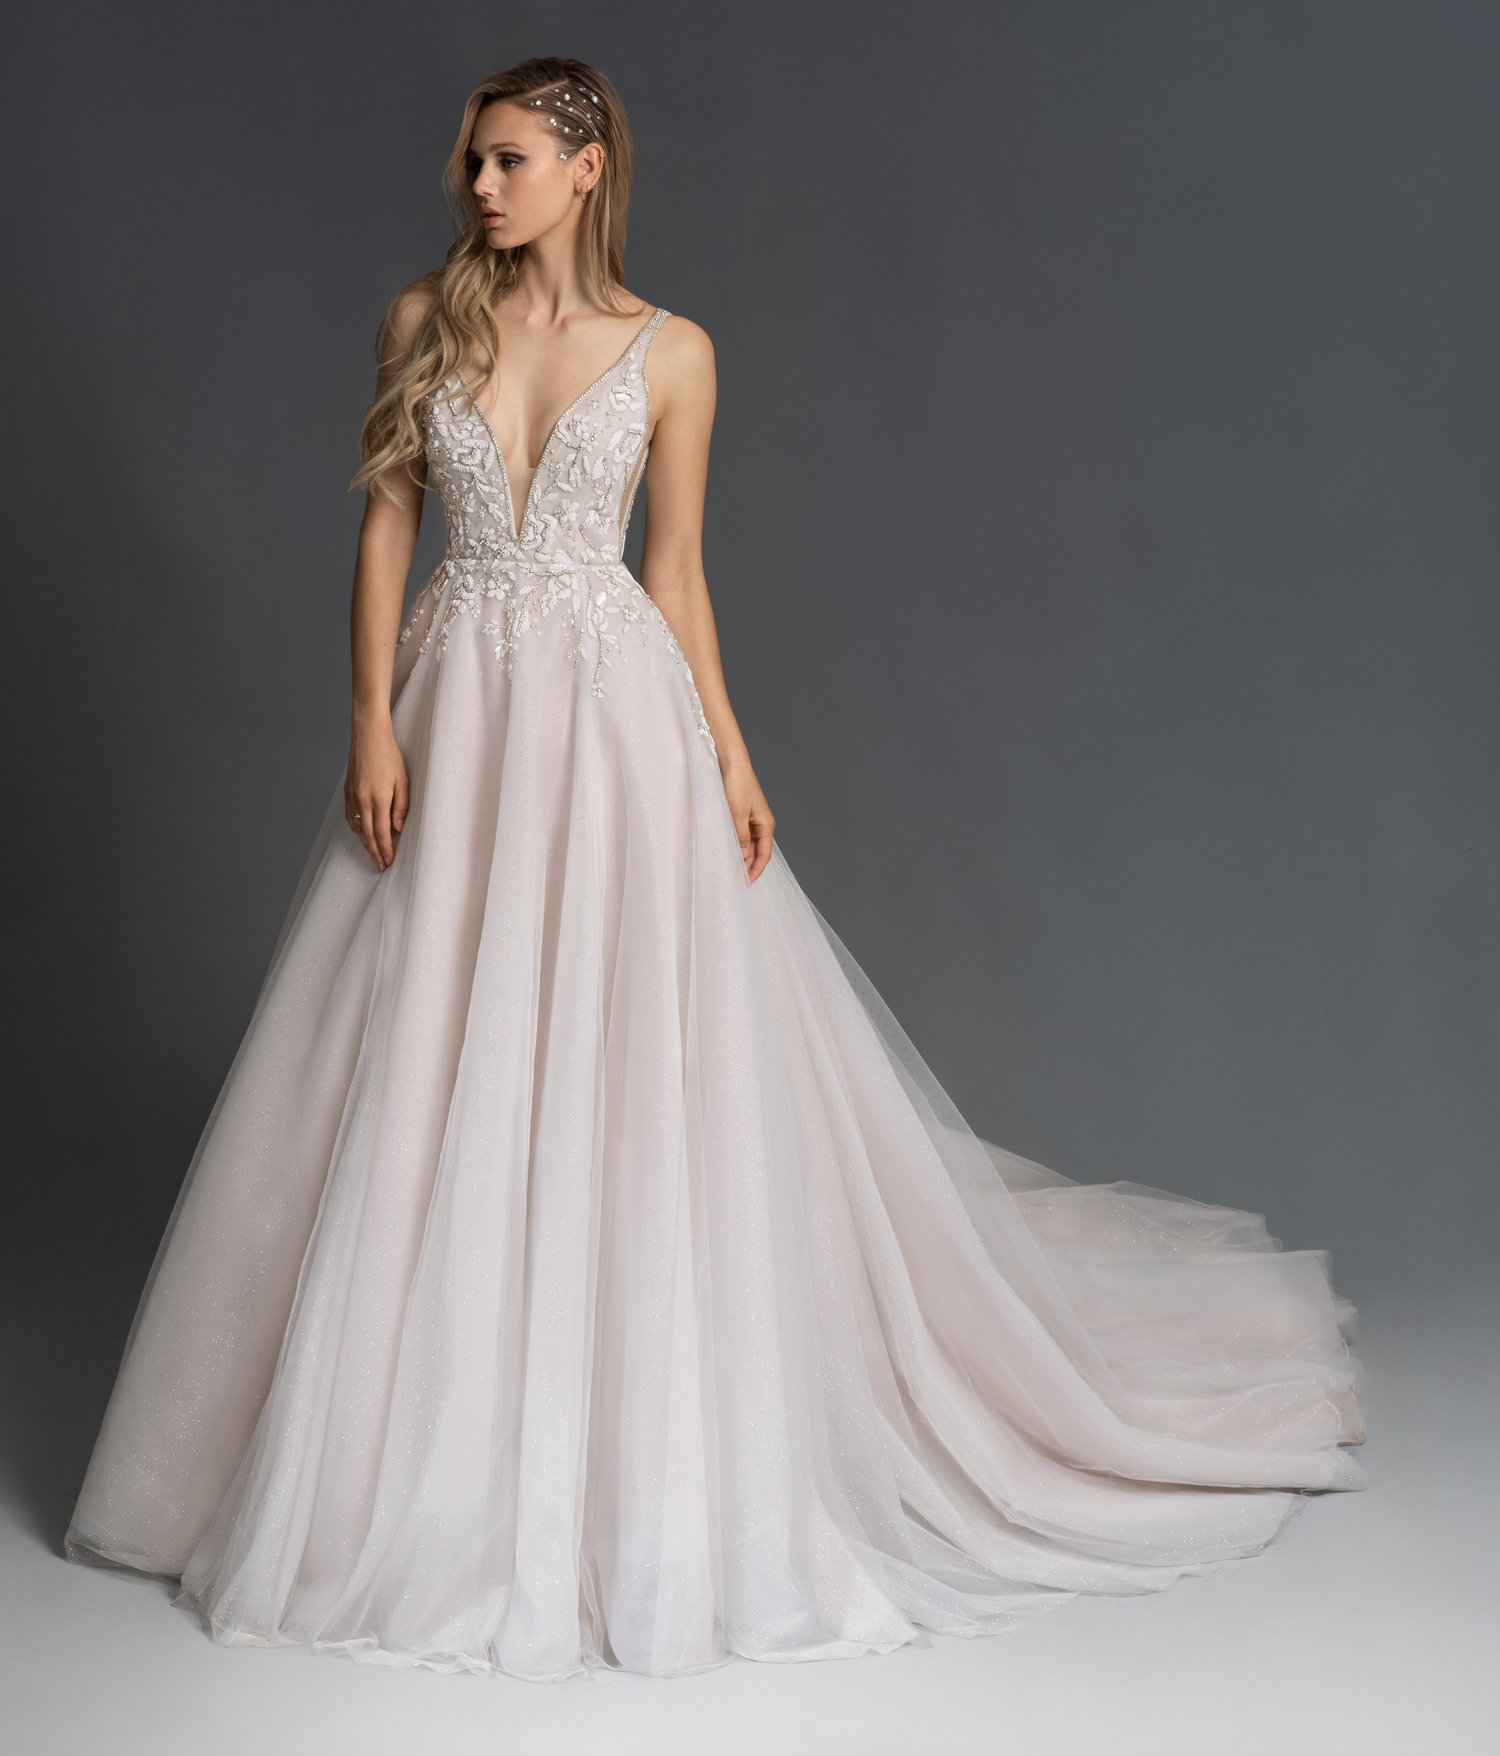 Beaded plus size gown - Wedding dresses - Leah S Designs bridal